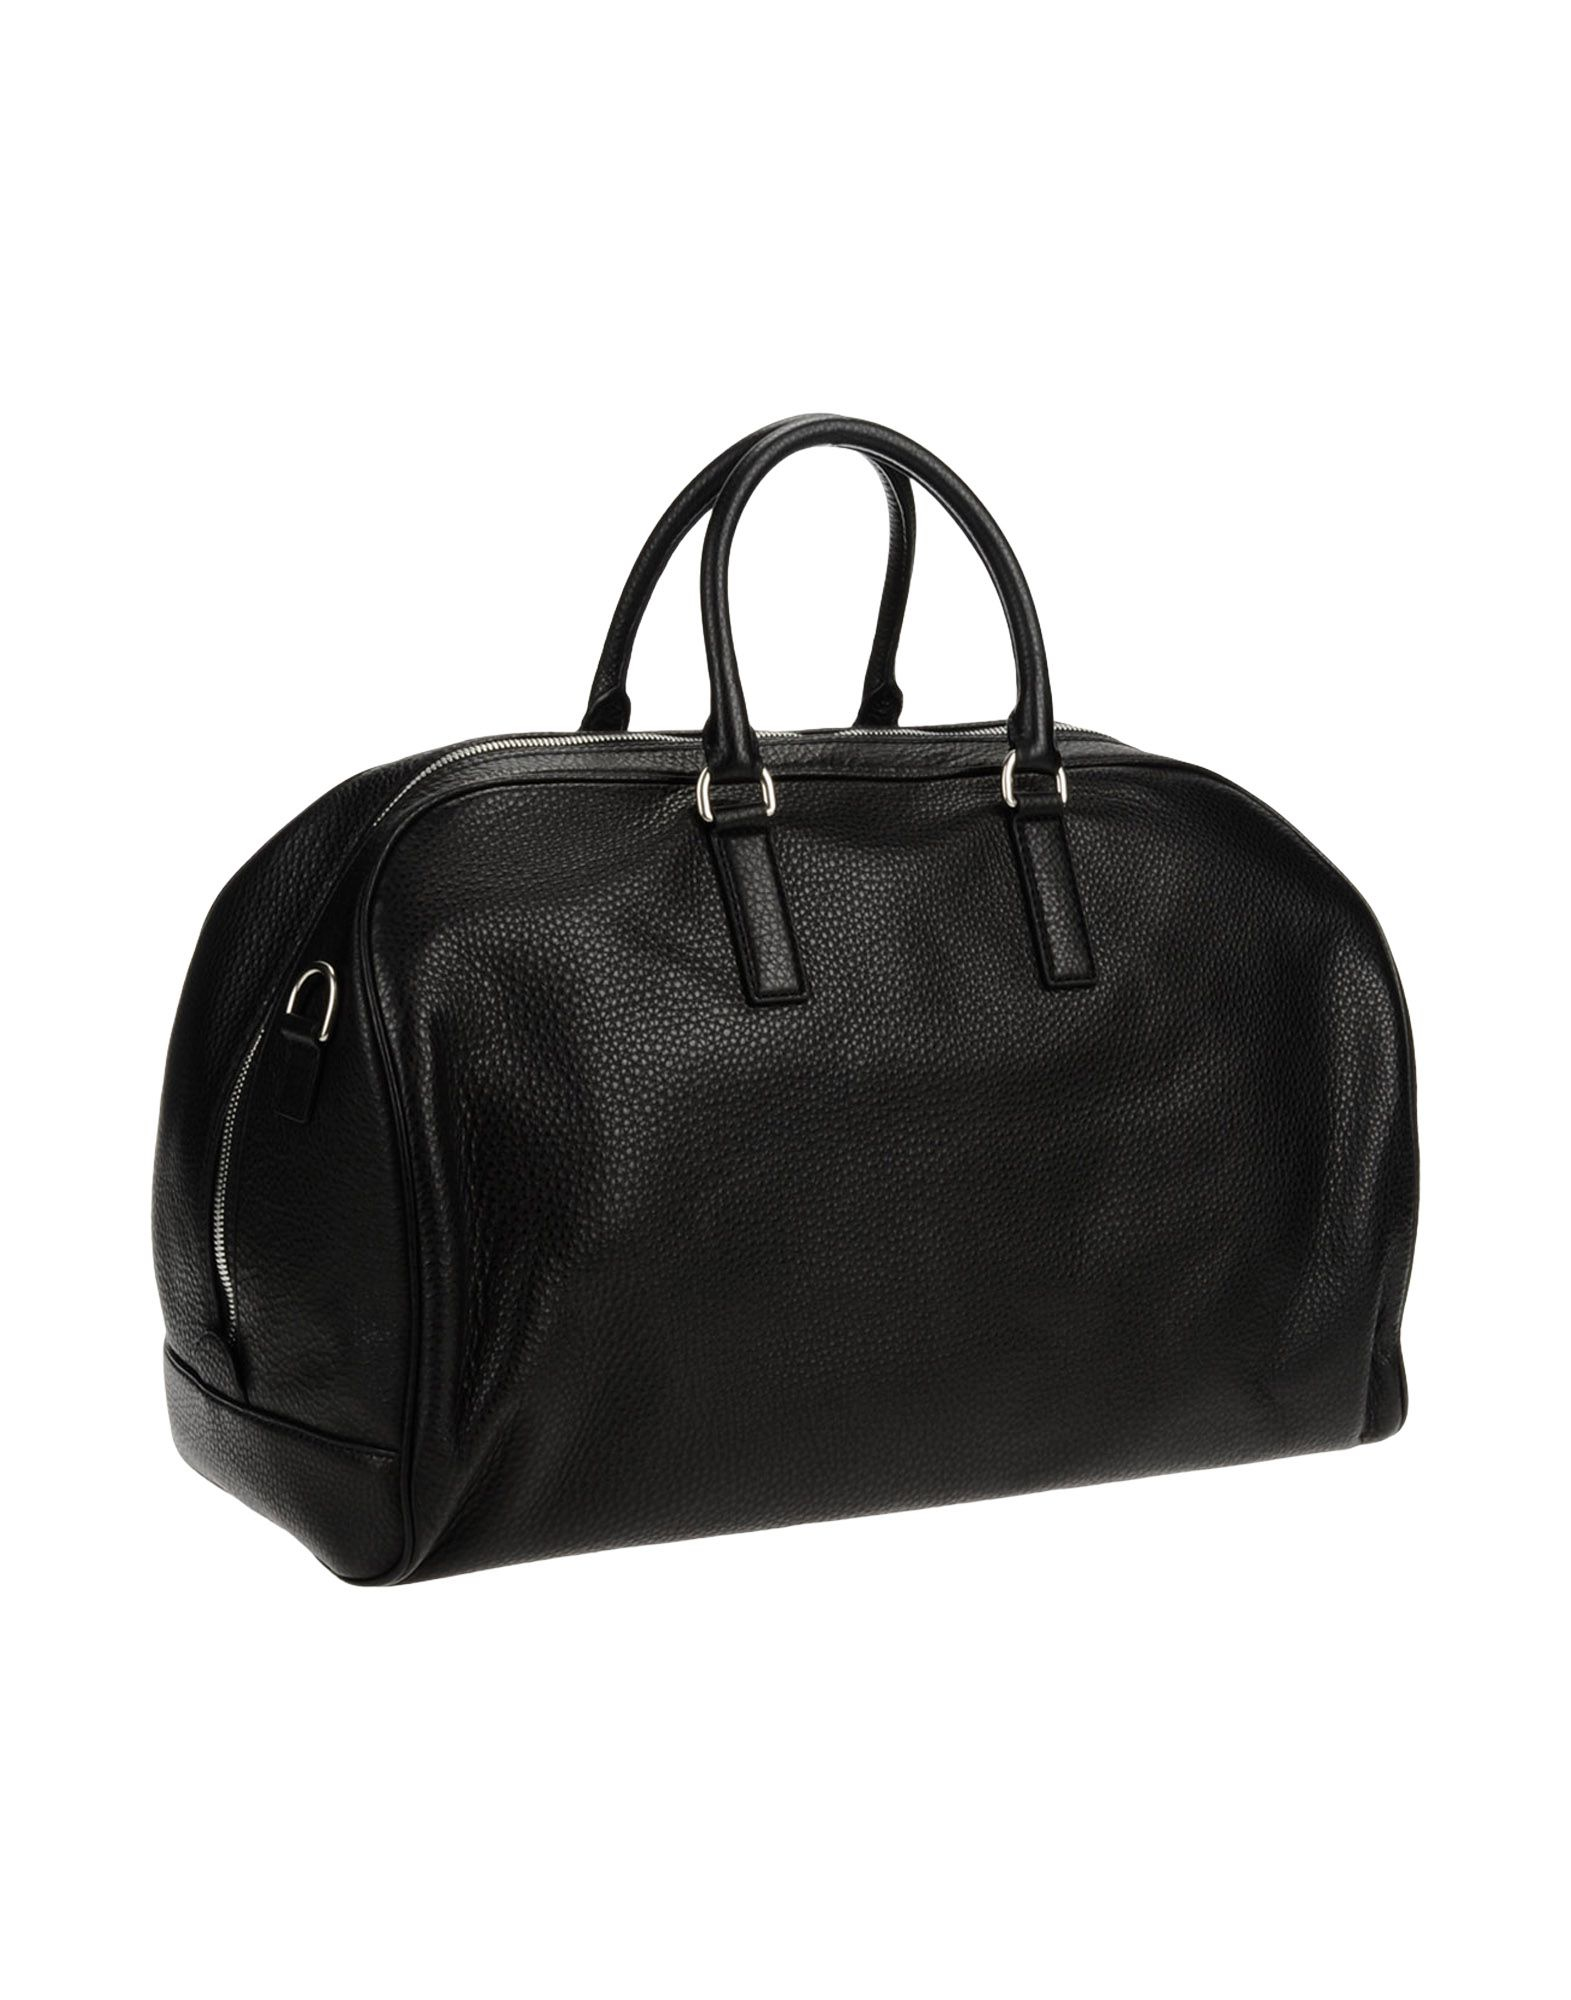 Michael Kors Travel & Duffel Bag in Black for Men - Lyst